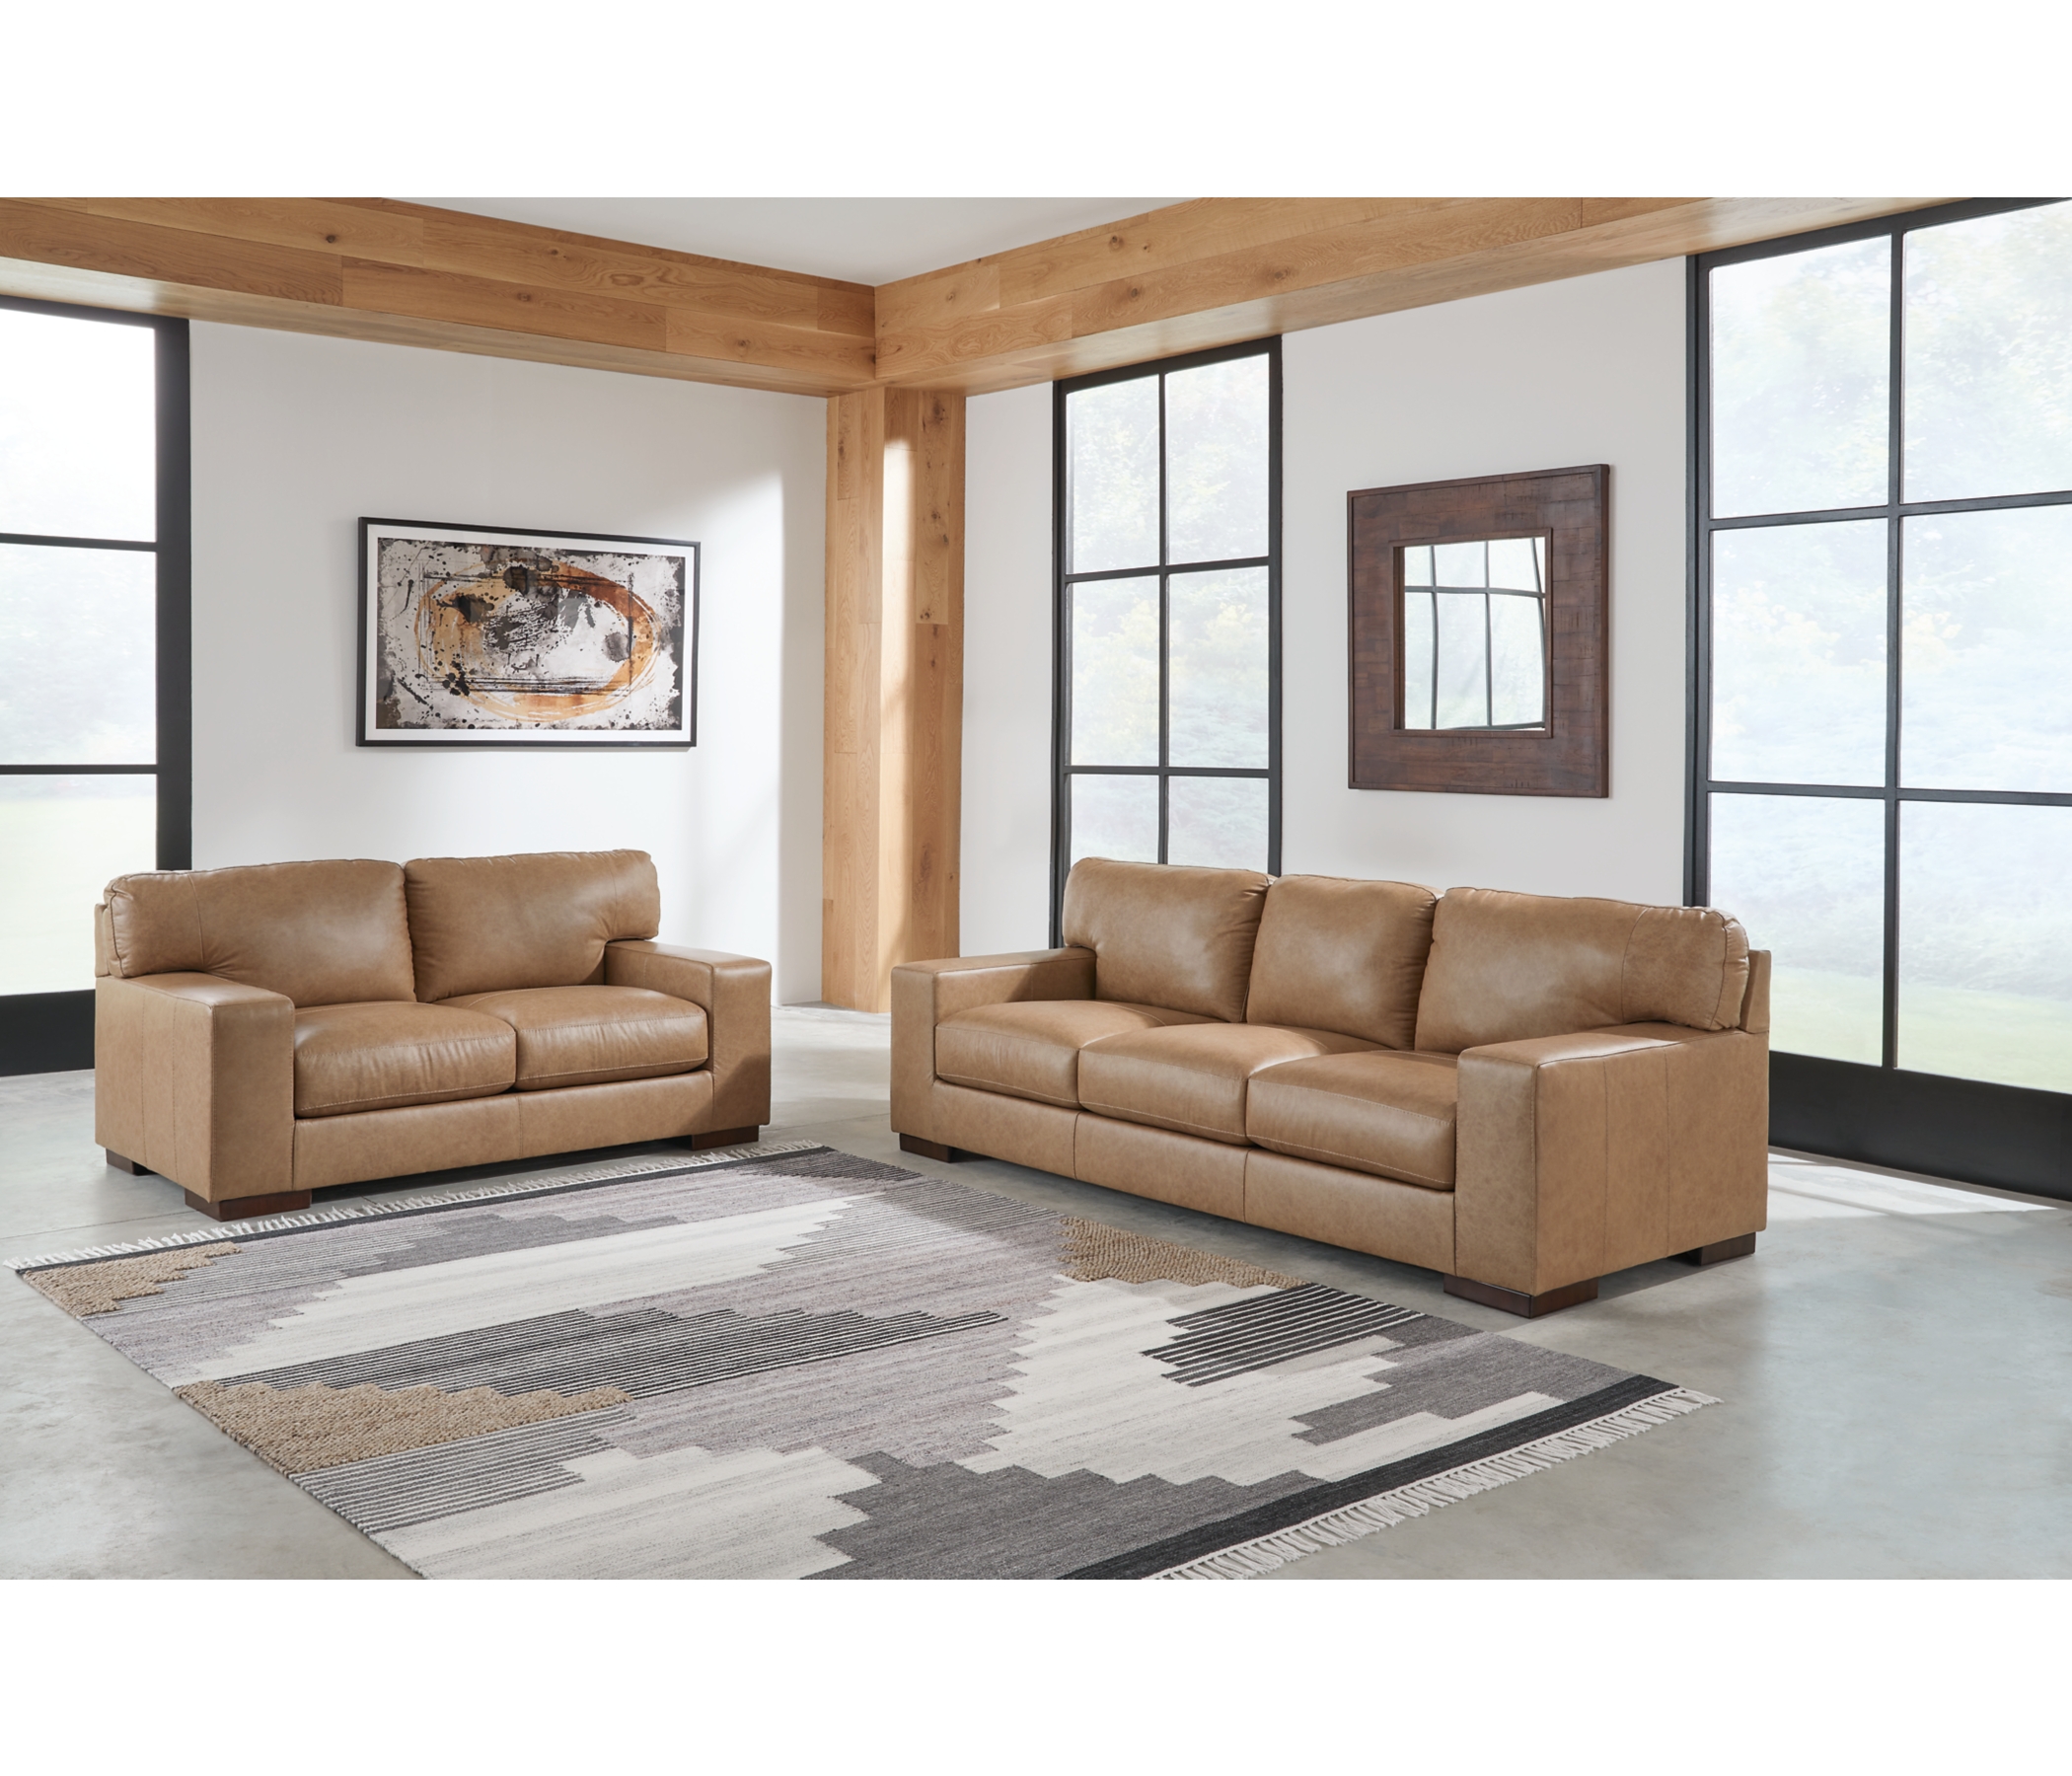 Lombardia Sofa and Loveseat, Tumbleweed, large